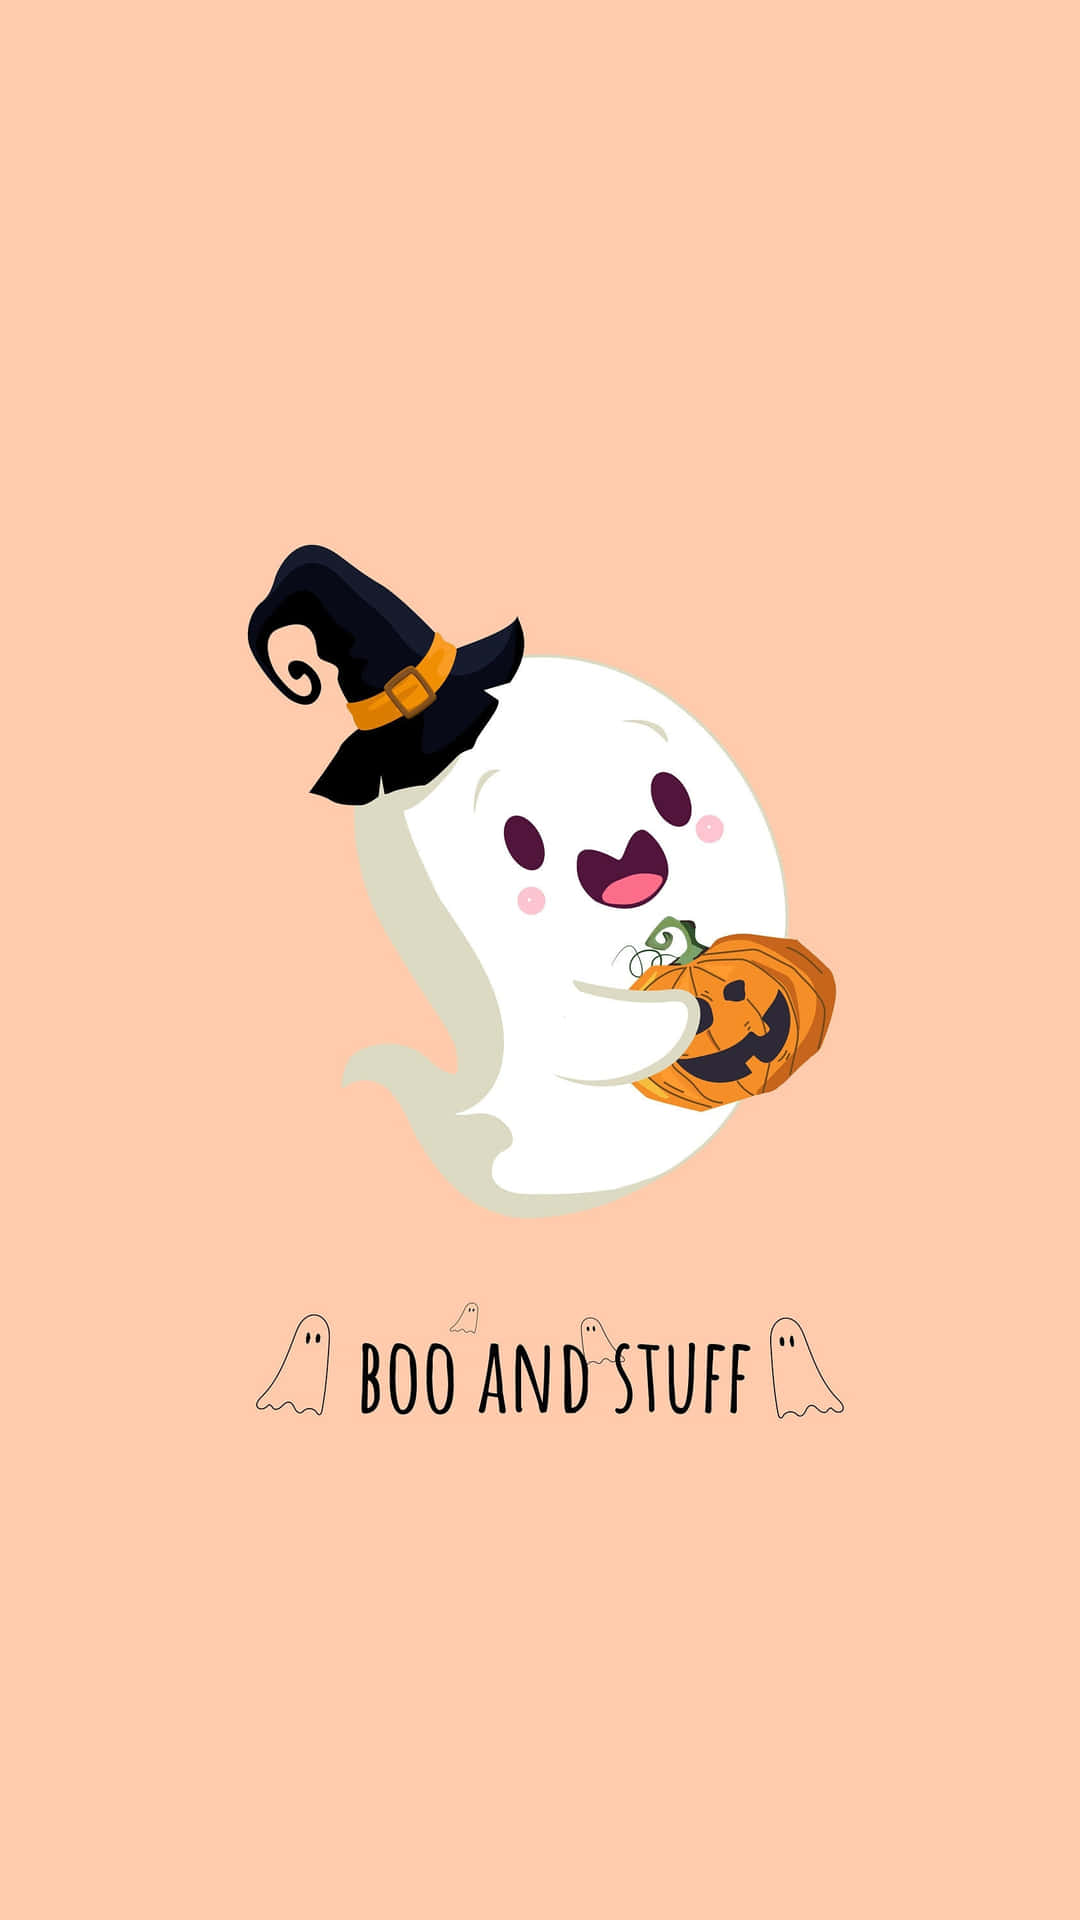 1. Shopper for Halloween udklædninger på Boo And Stuff. Wallpaper